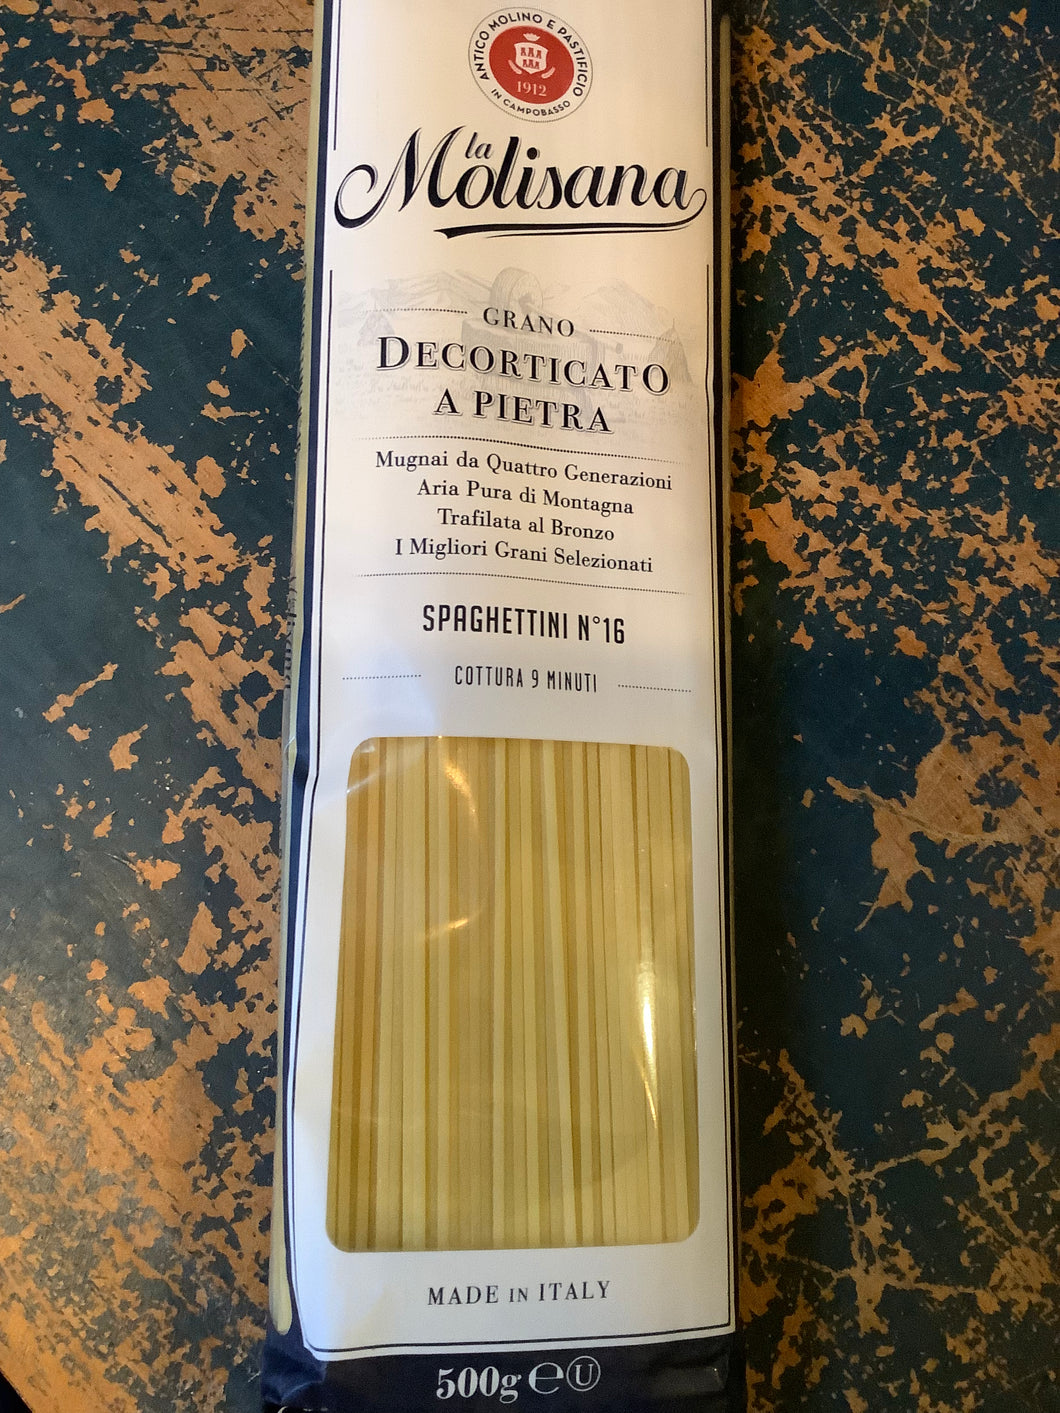 La Molisana Spaghettini no.16 - 500g